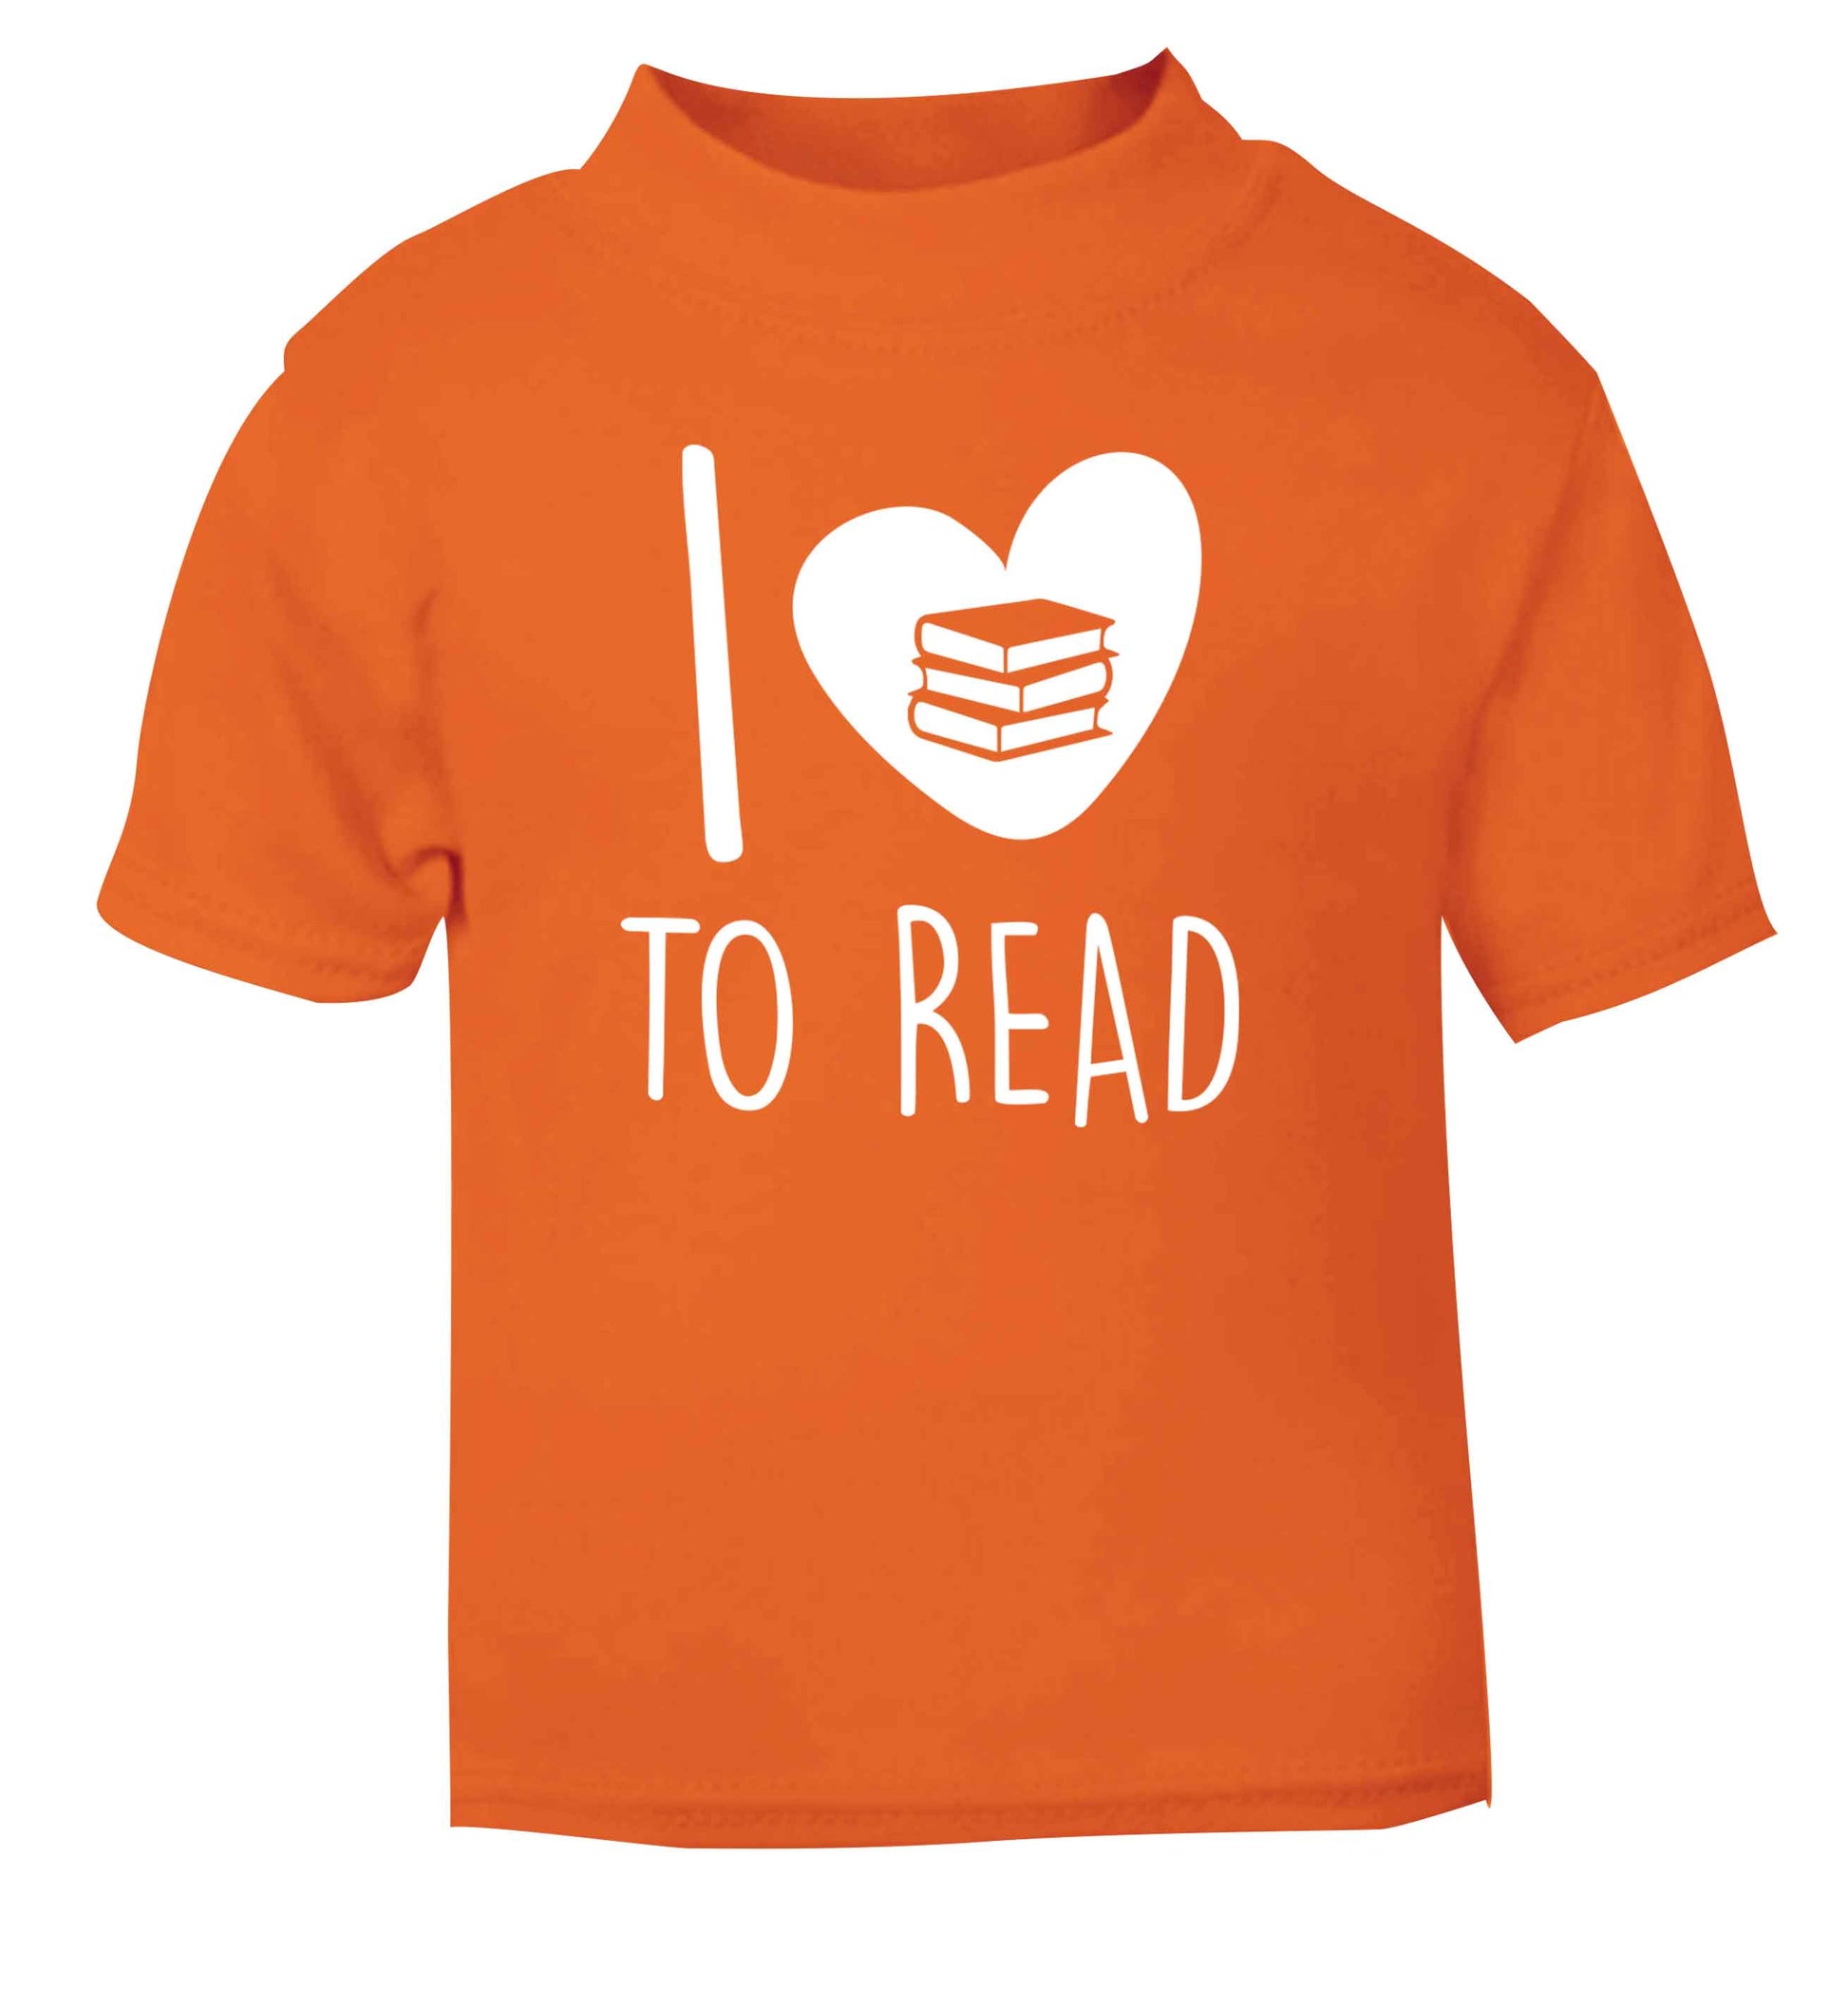 I love to read orange Baby Toddler Tshirt 2 Years